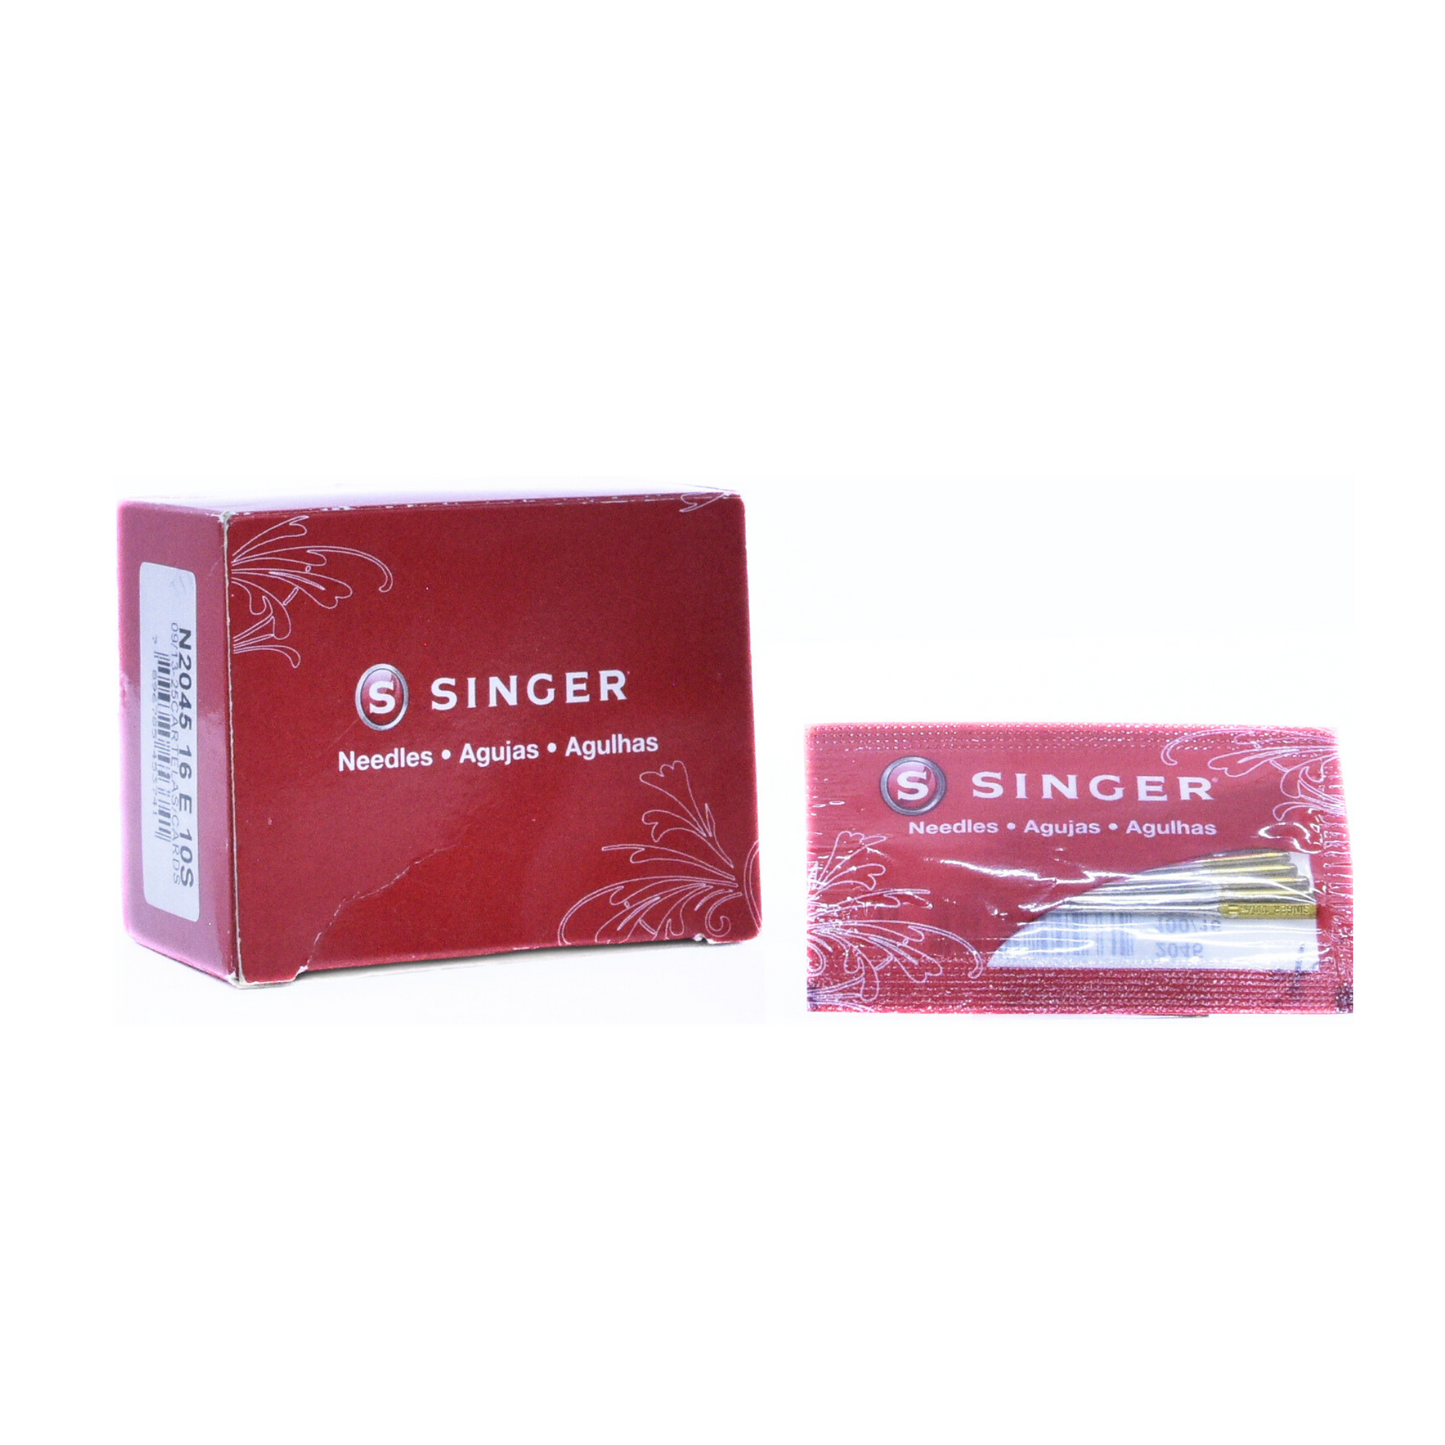 Singer sewing needles